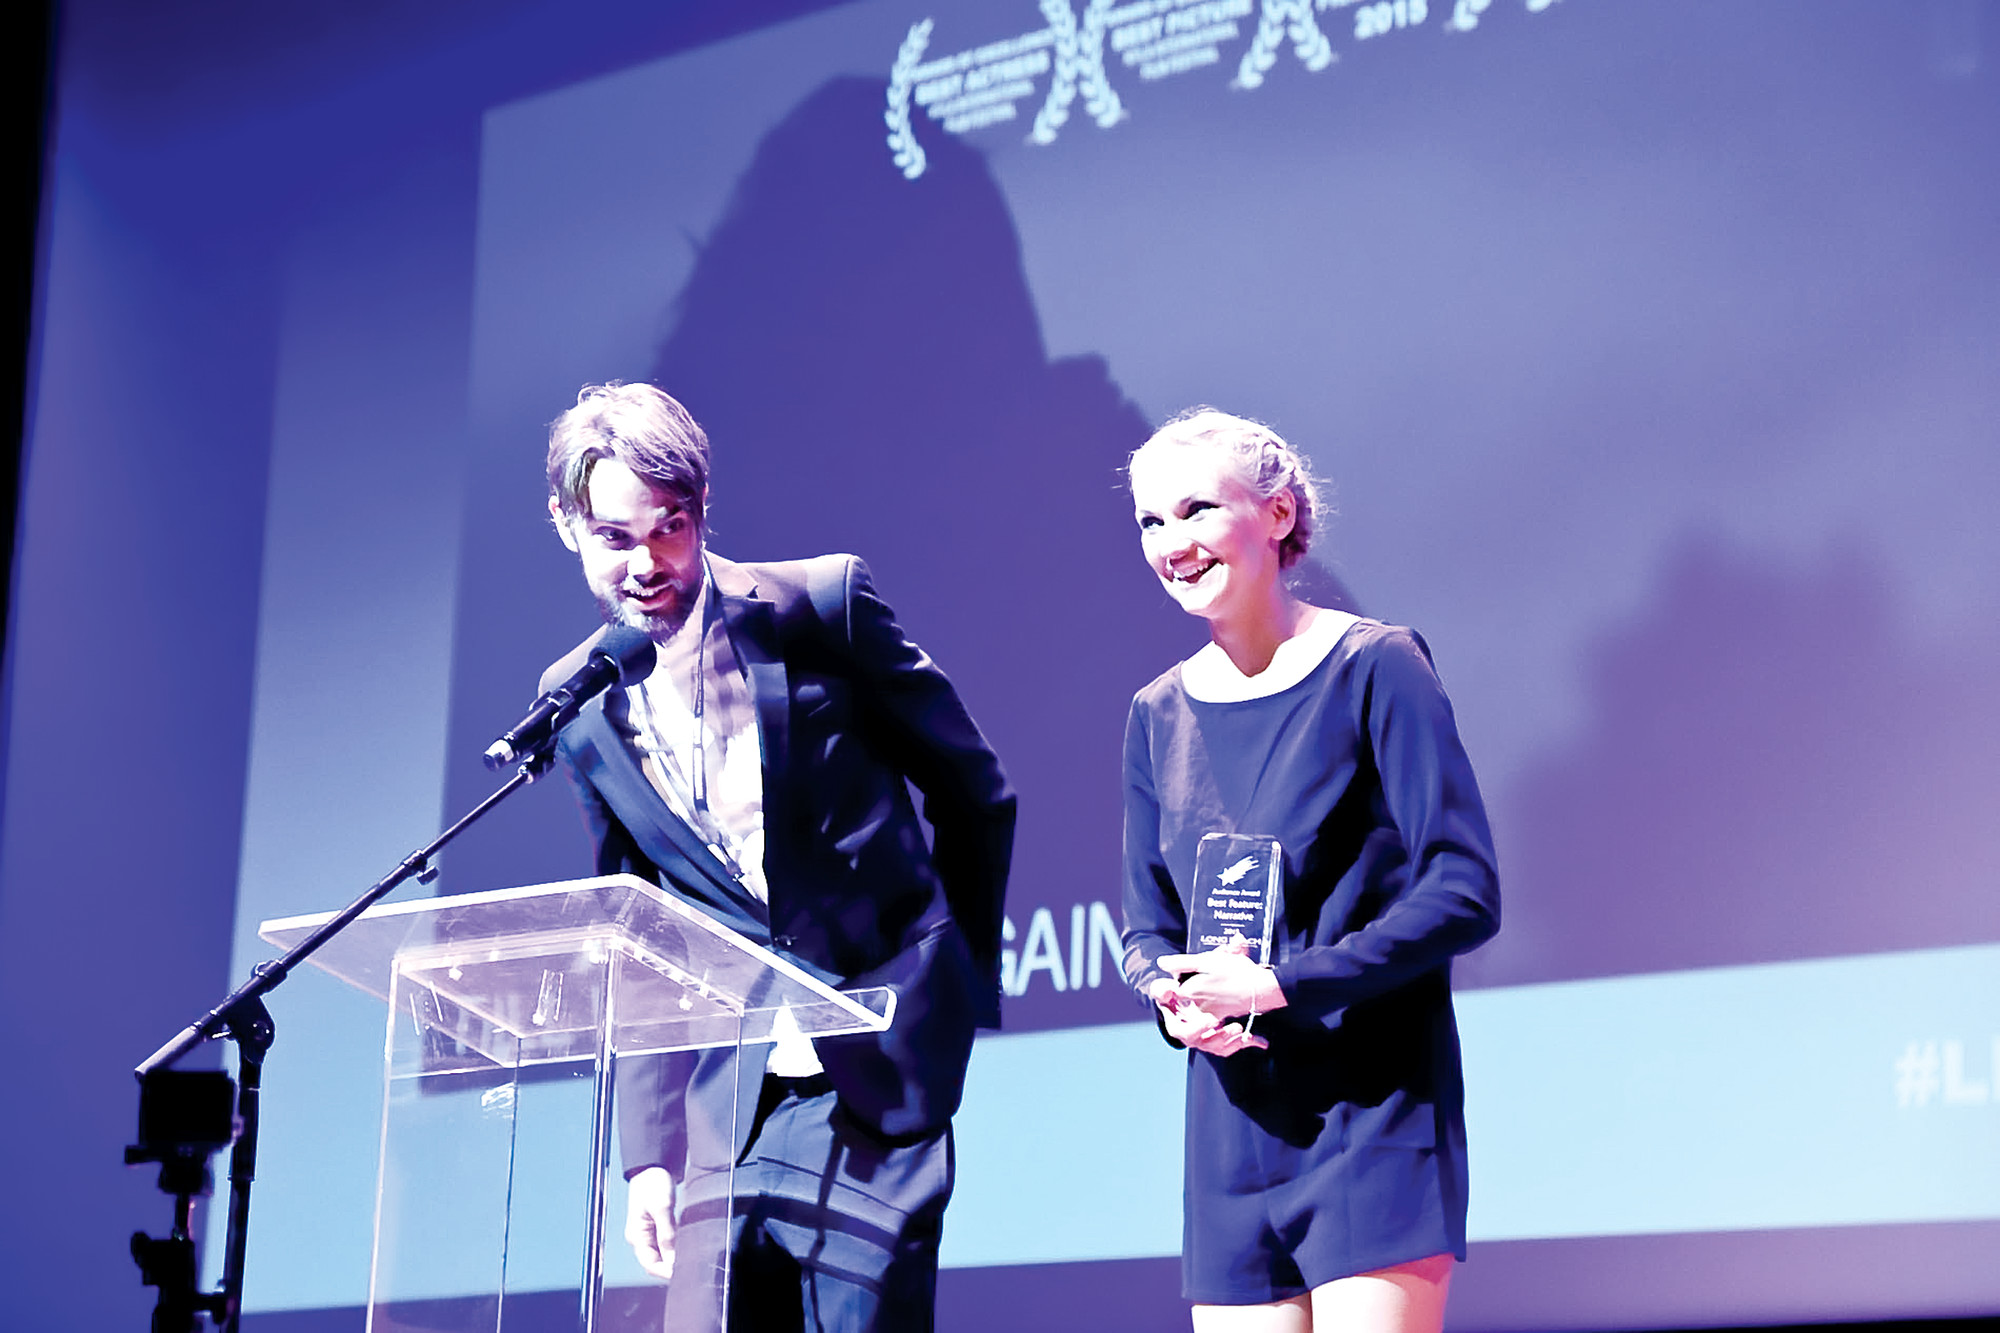 Courtesy Long Beach International Film Festival
John Matton and Linnea Larsdotter accepted the award for Best Narrative Feature for their film “Till We Meet Again” at the Long Beach International Film Festival last weekend.